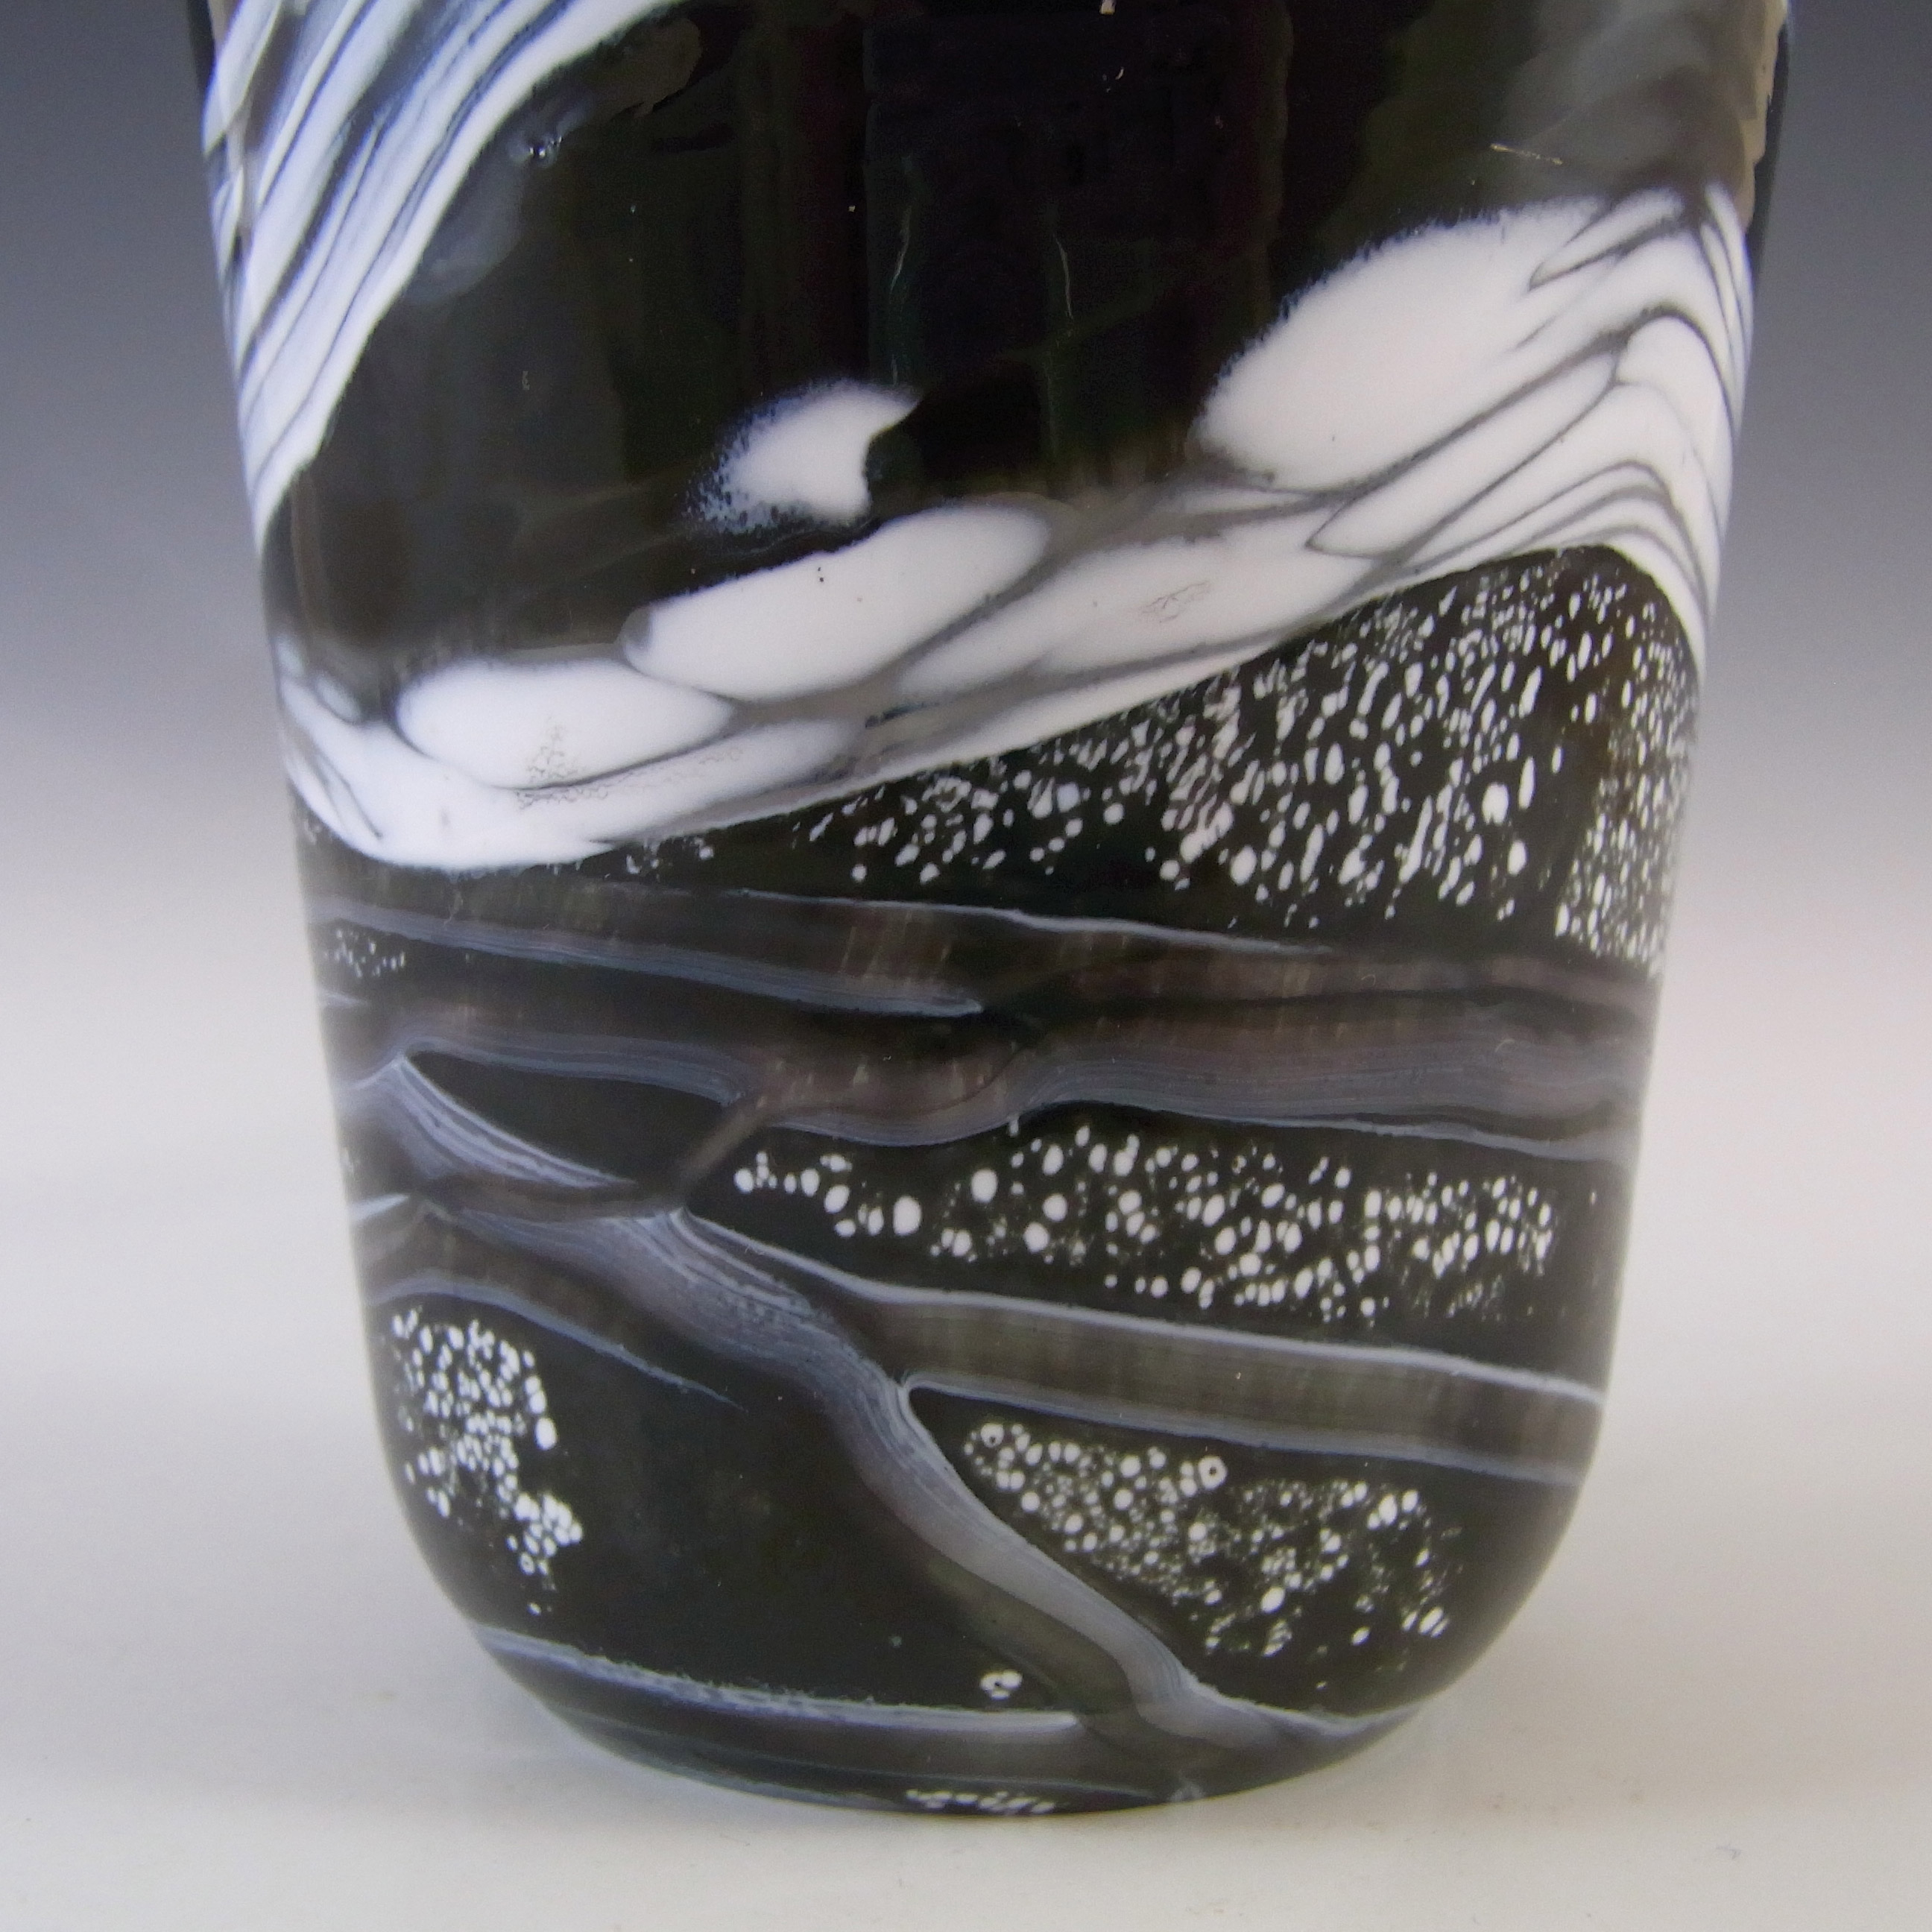 (image for) SIGNED Gozo Maltese Black & White Glass 'Noir' Vase - Click Image to Close